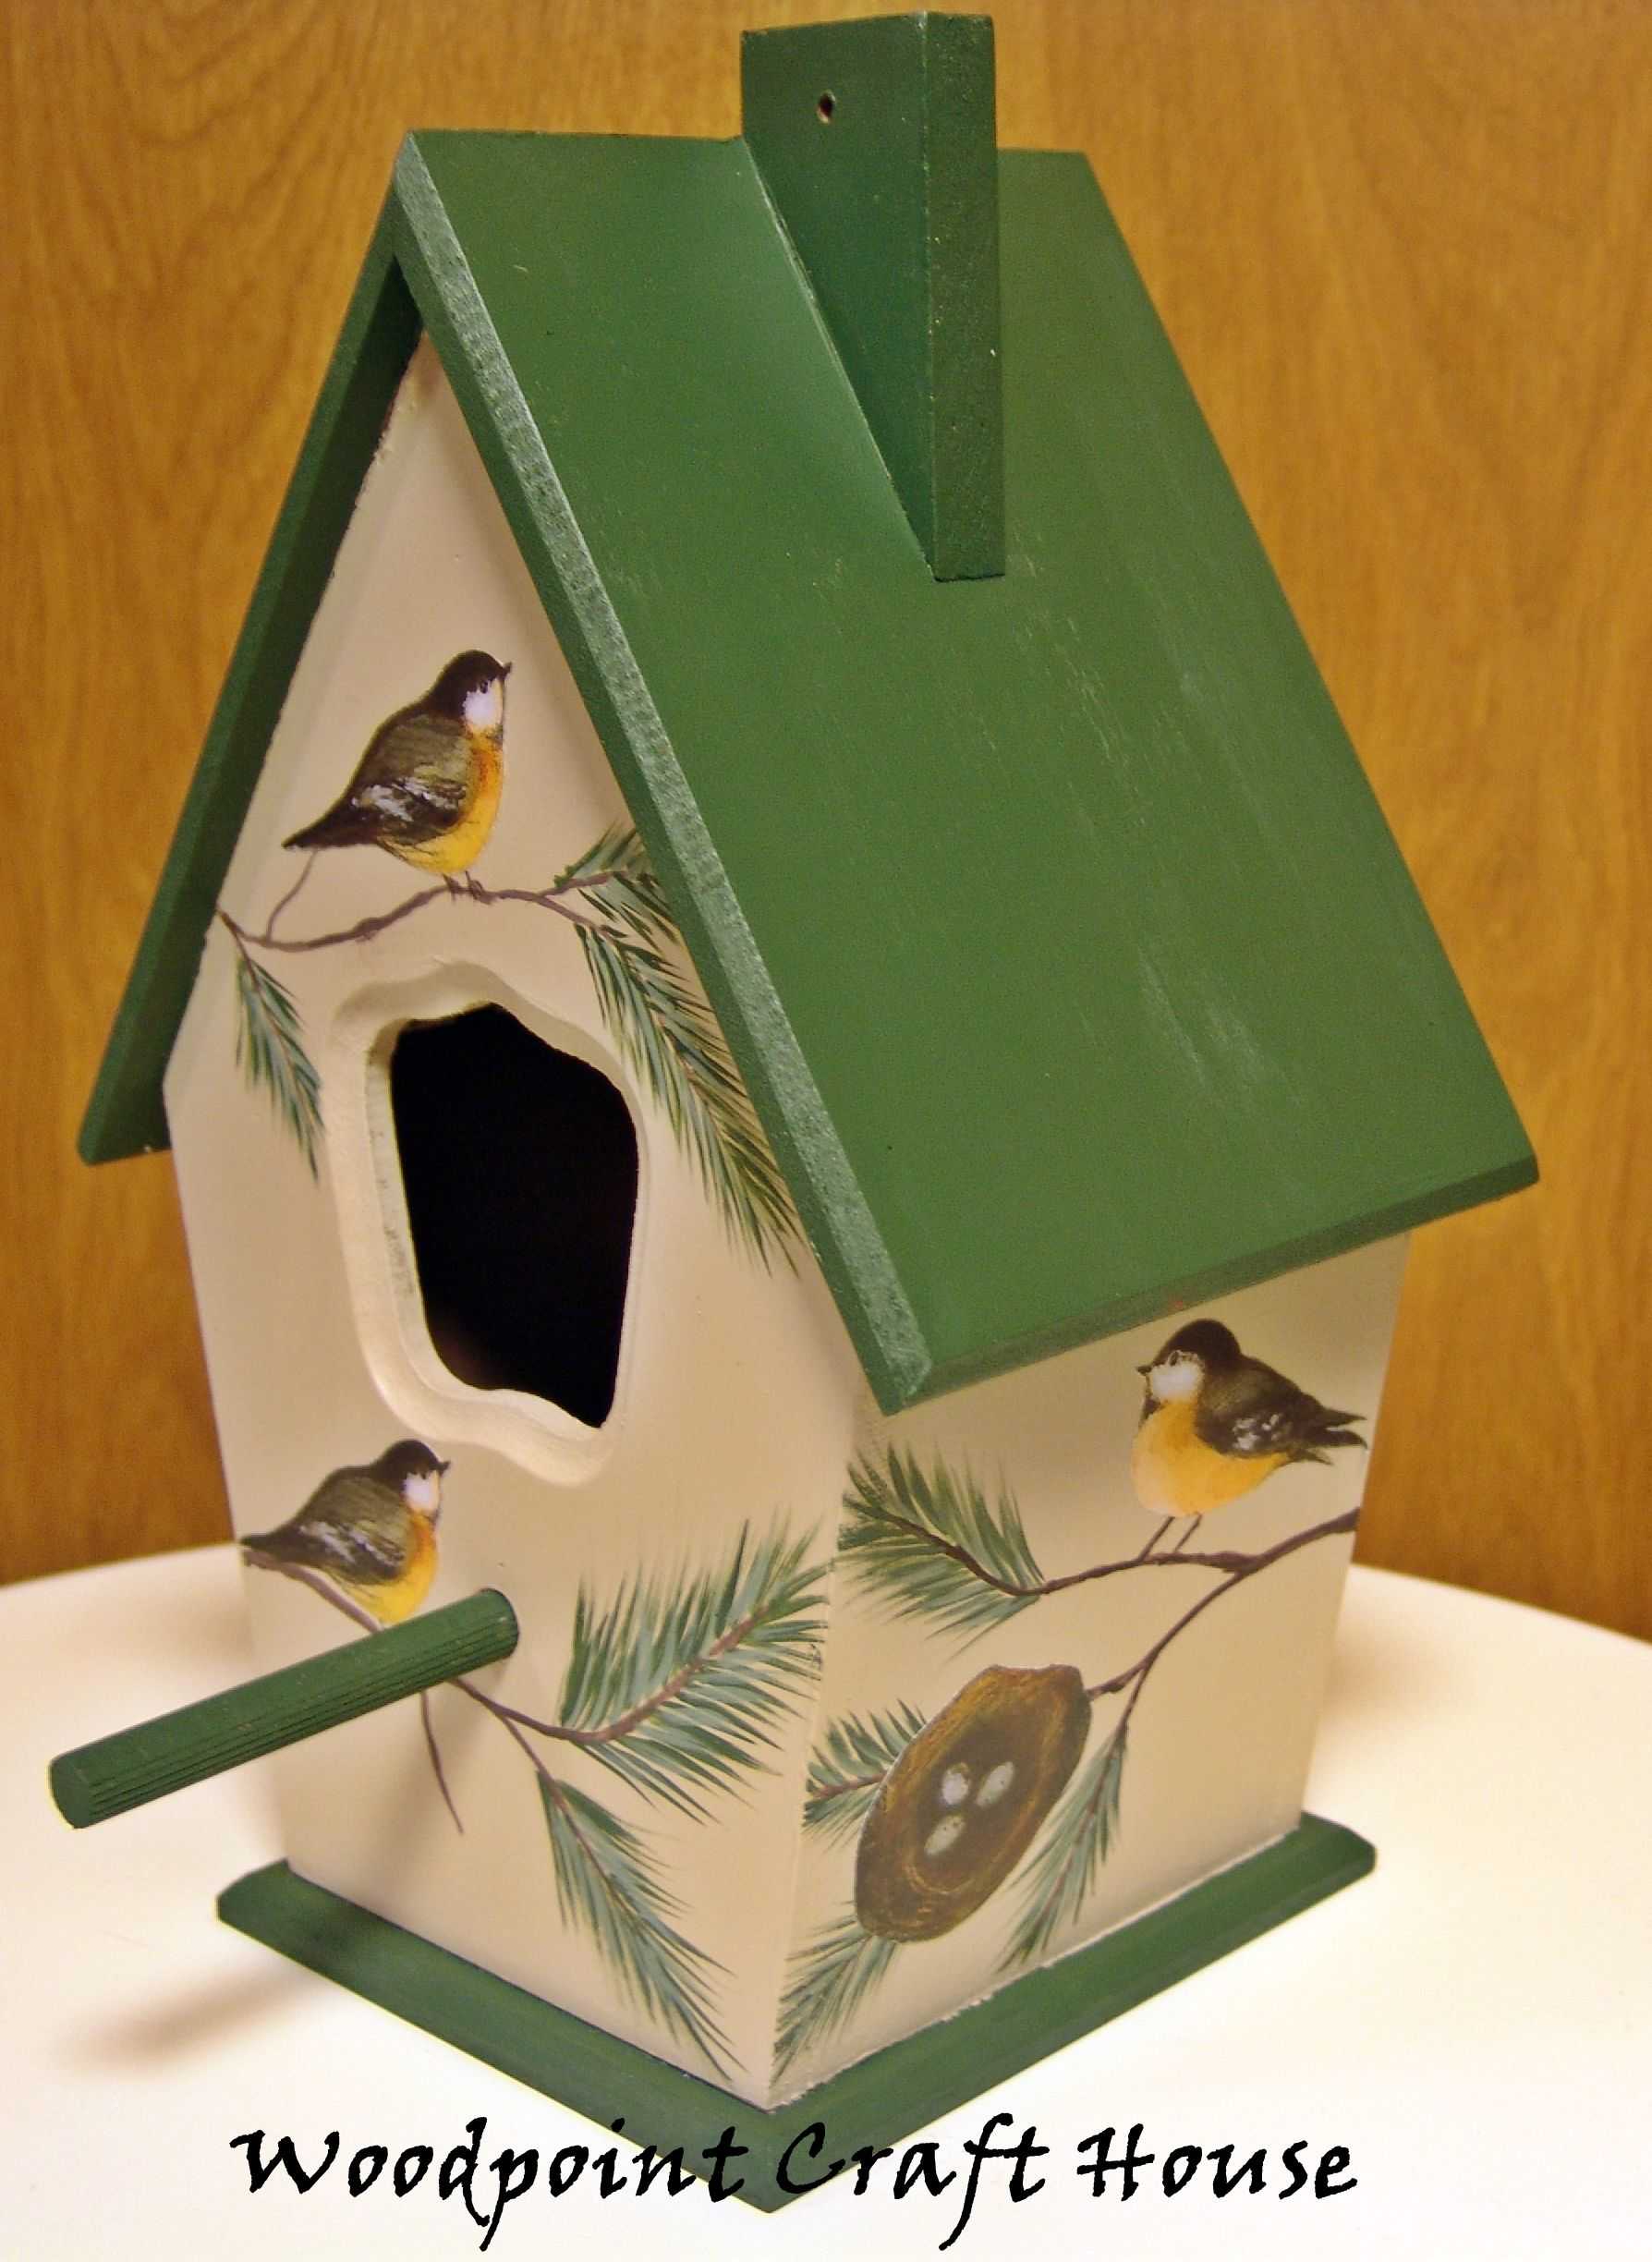 Как раскрасить кормушку для птиц: из дерева, пластика, картона и веток